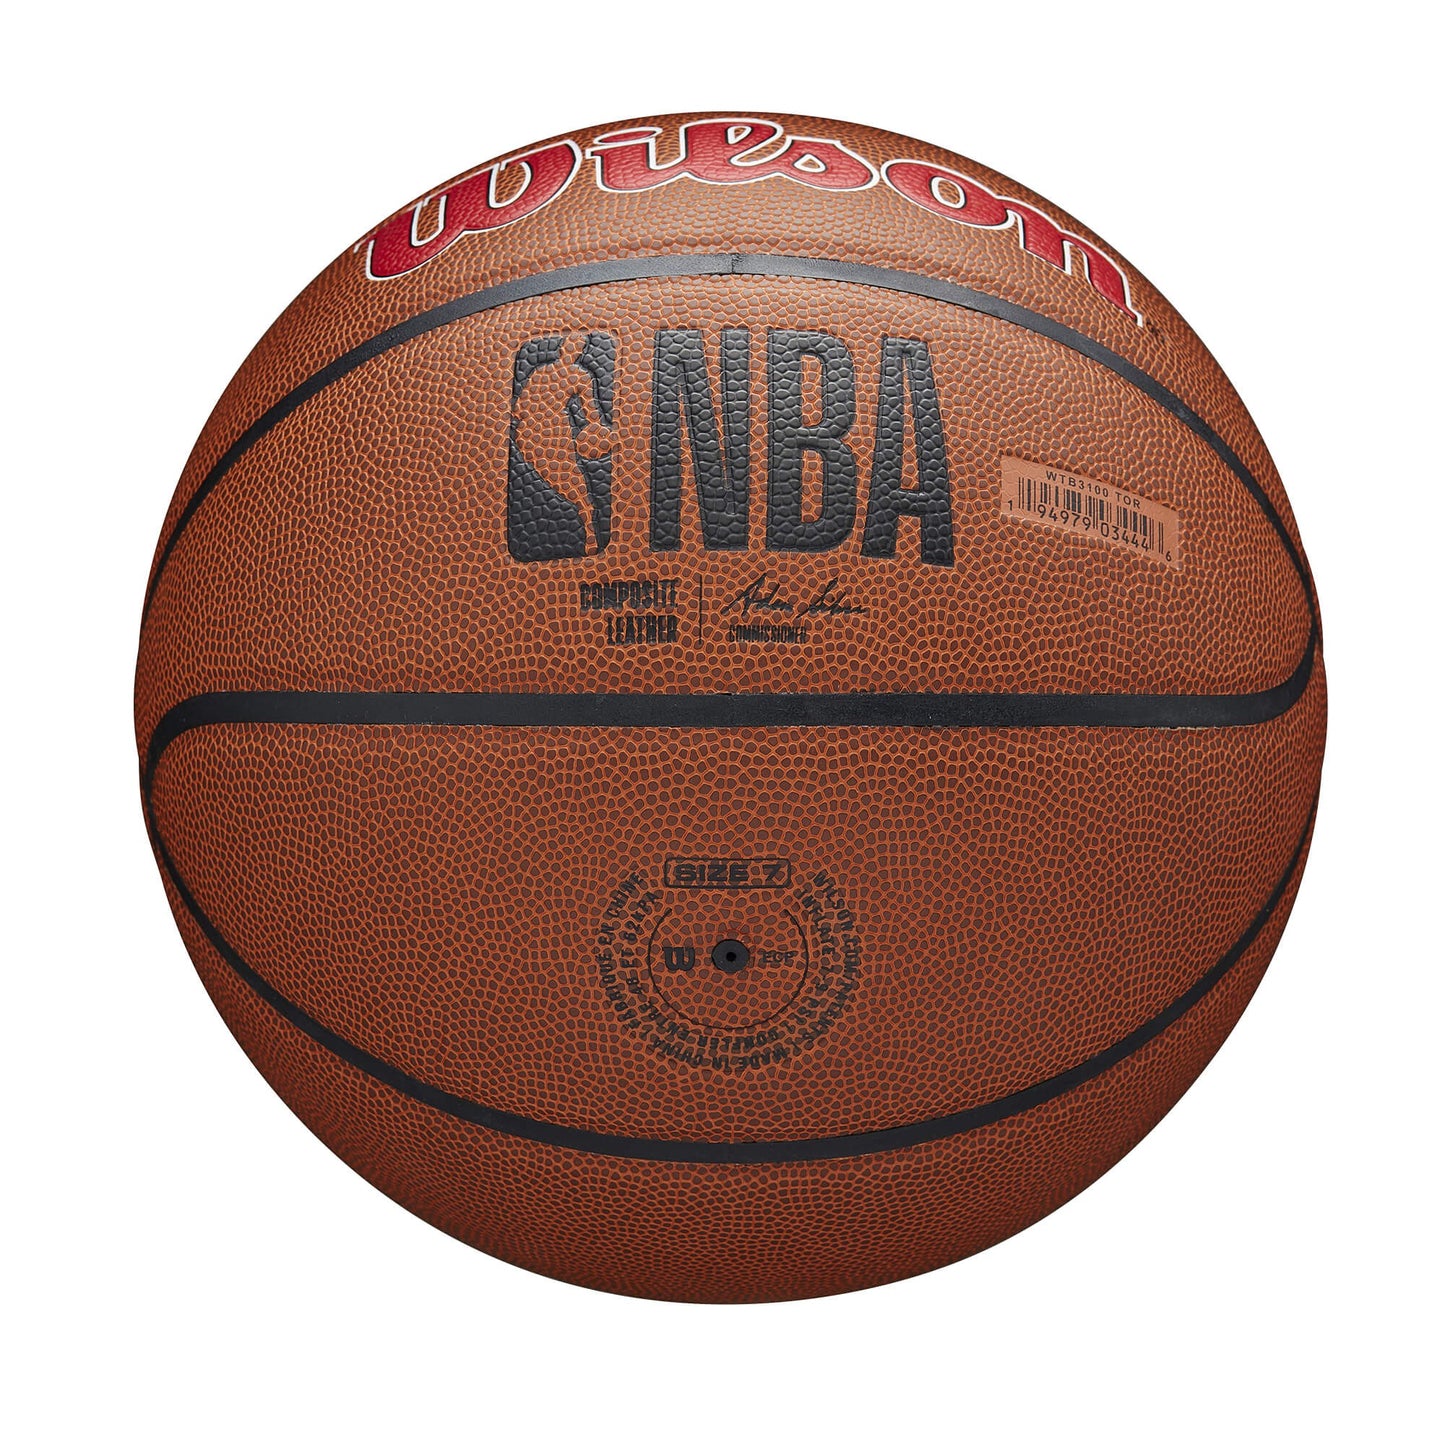 Wilson NBA Team Alliance Composite Basketball Toronto Raptors (sz. 7)